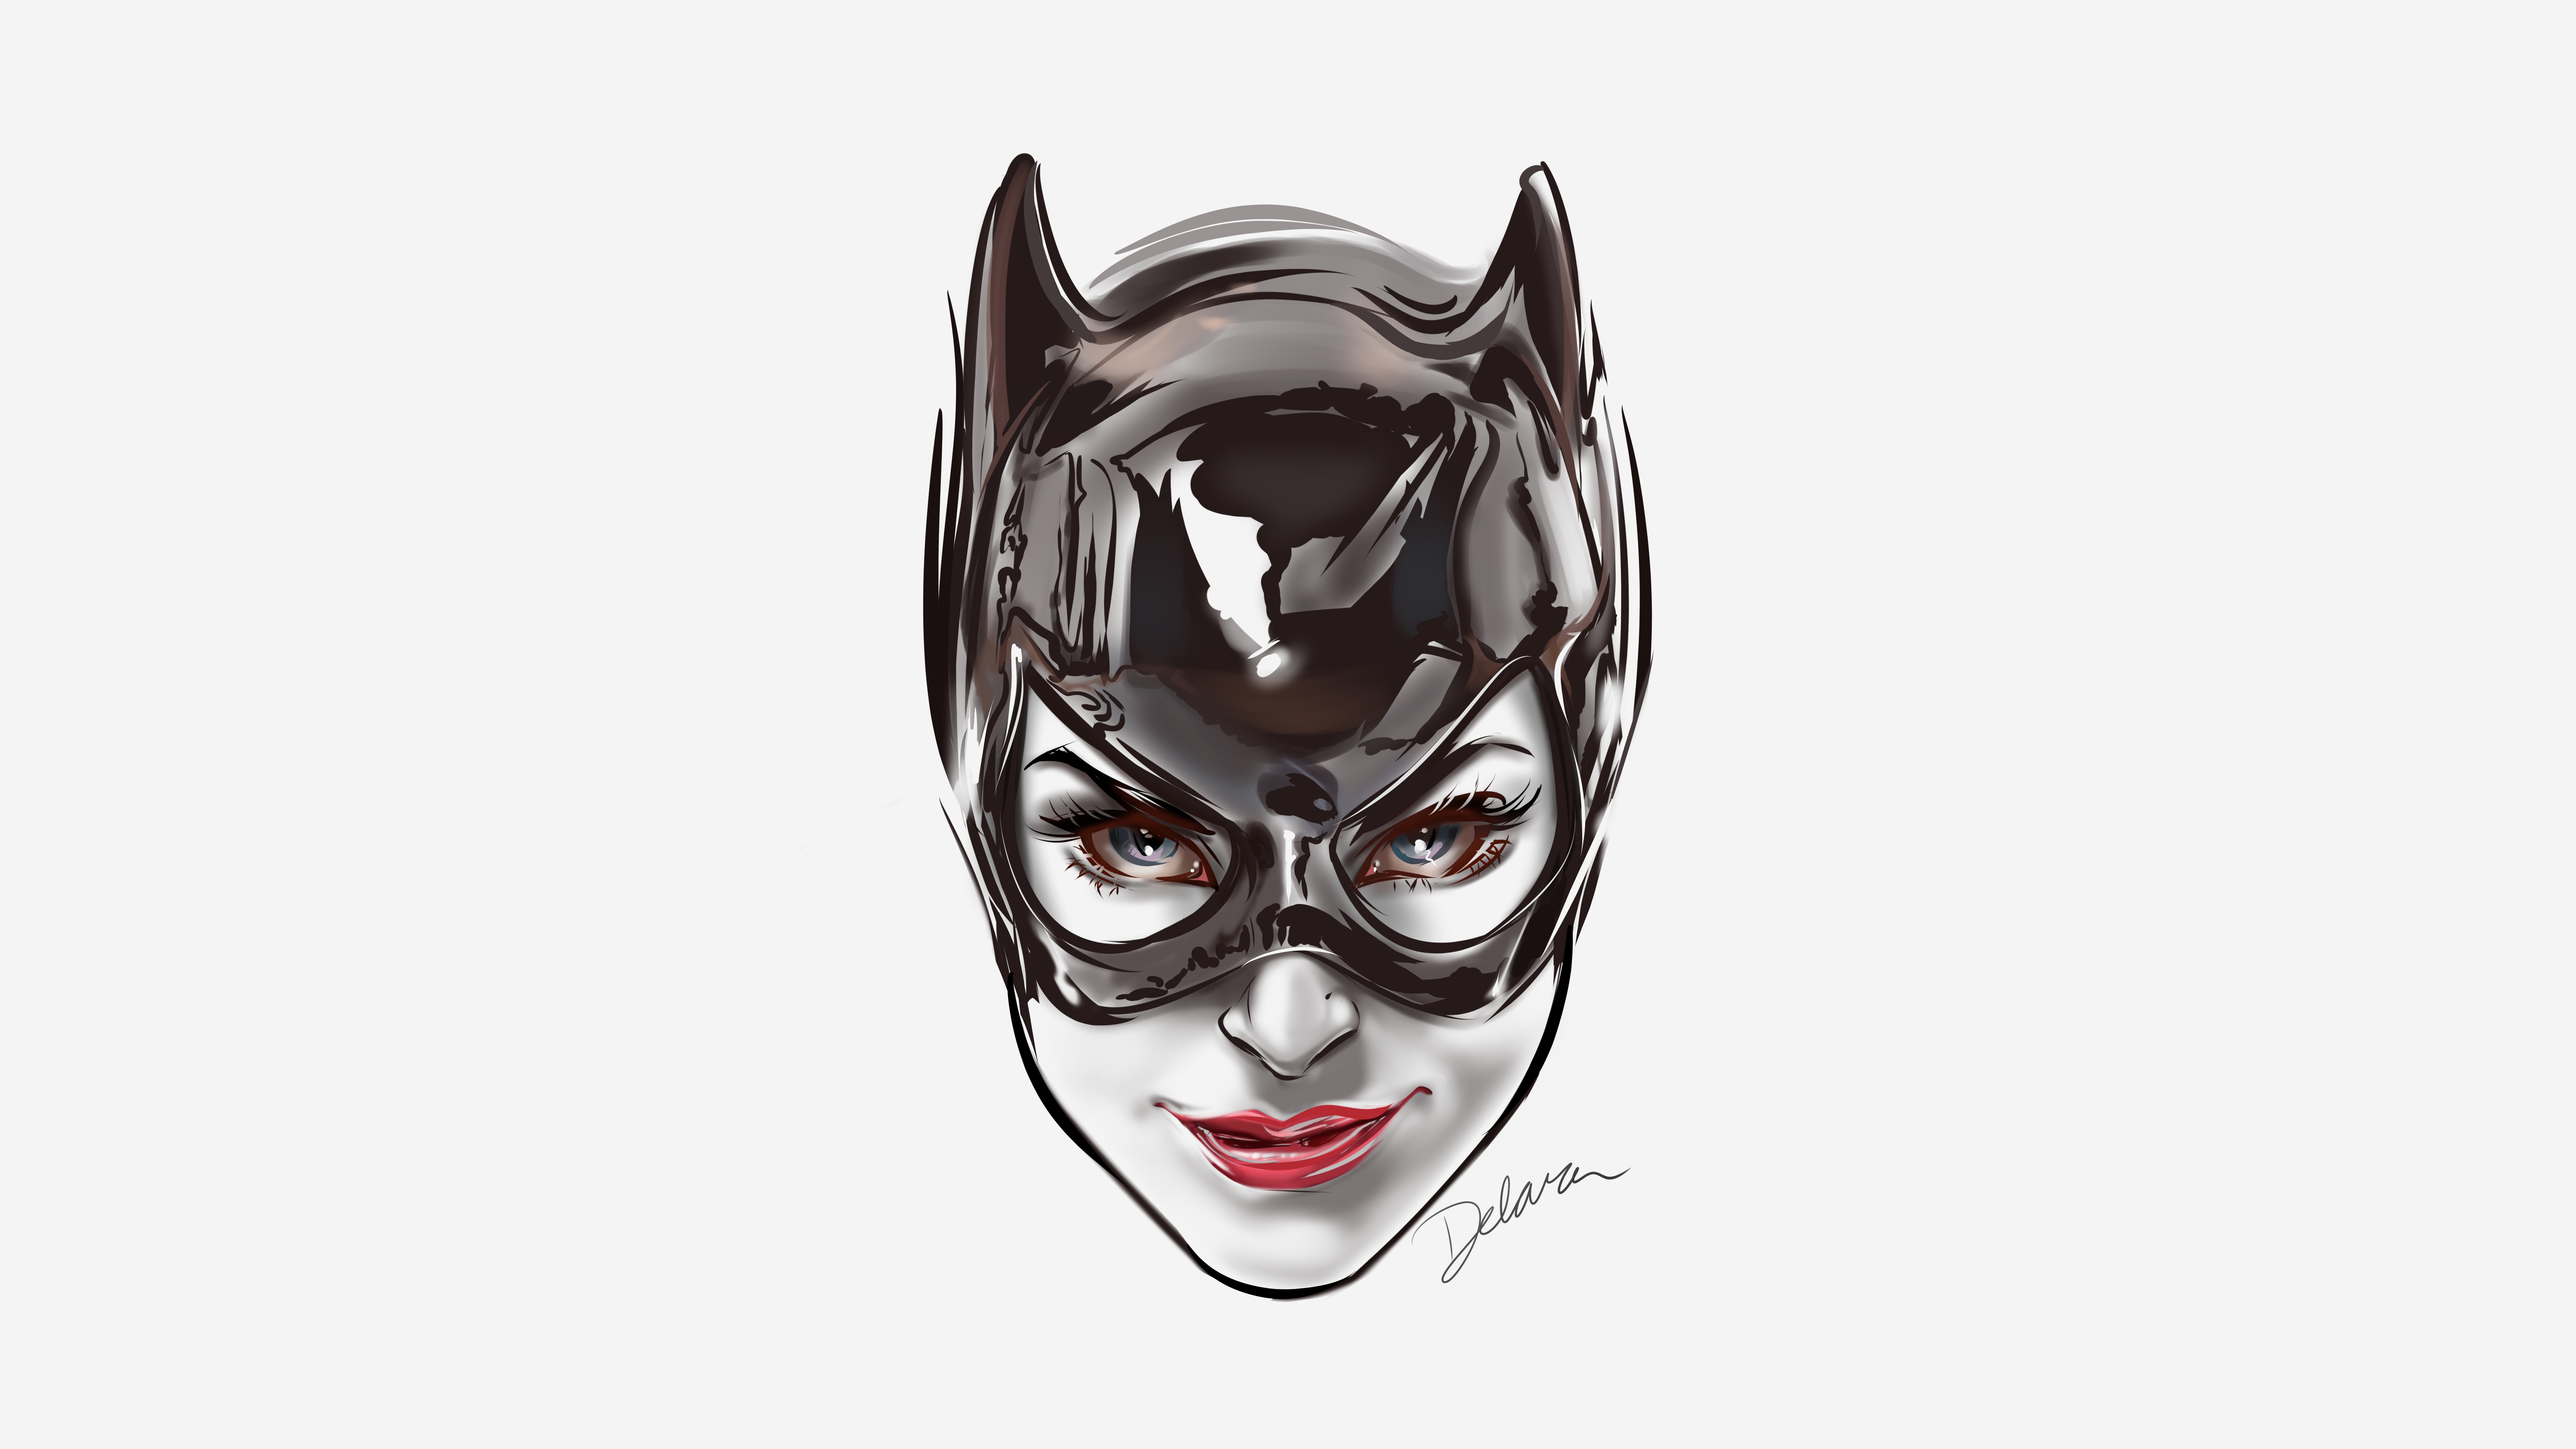 General 8000x4500 Catwoman face Batman women superheroines digital art signature watermarked simple background